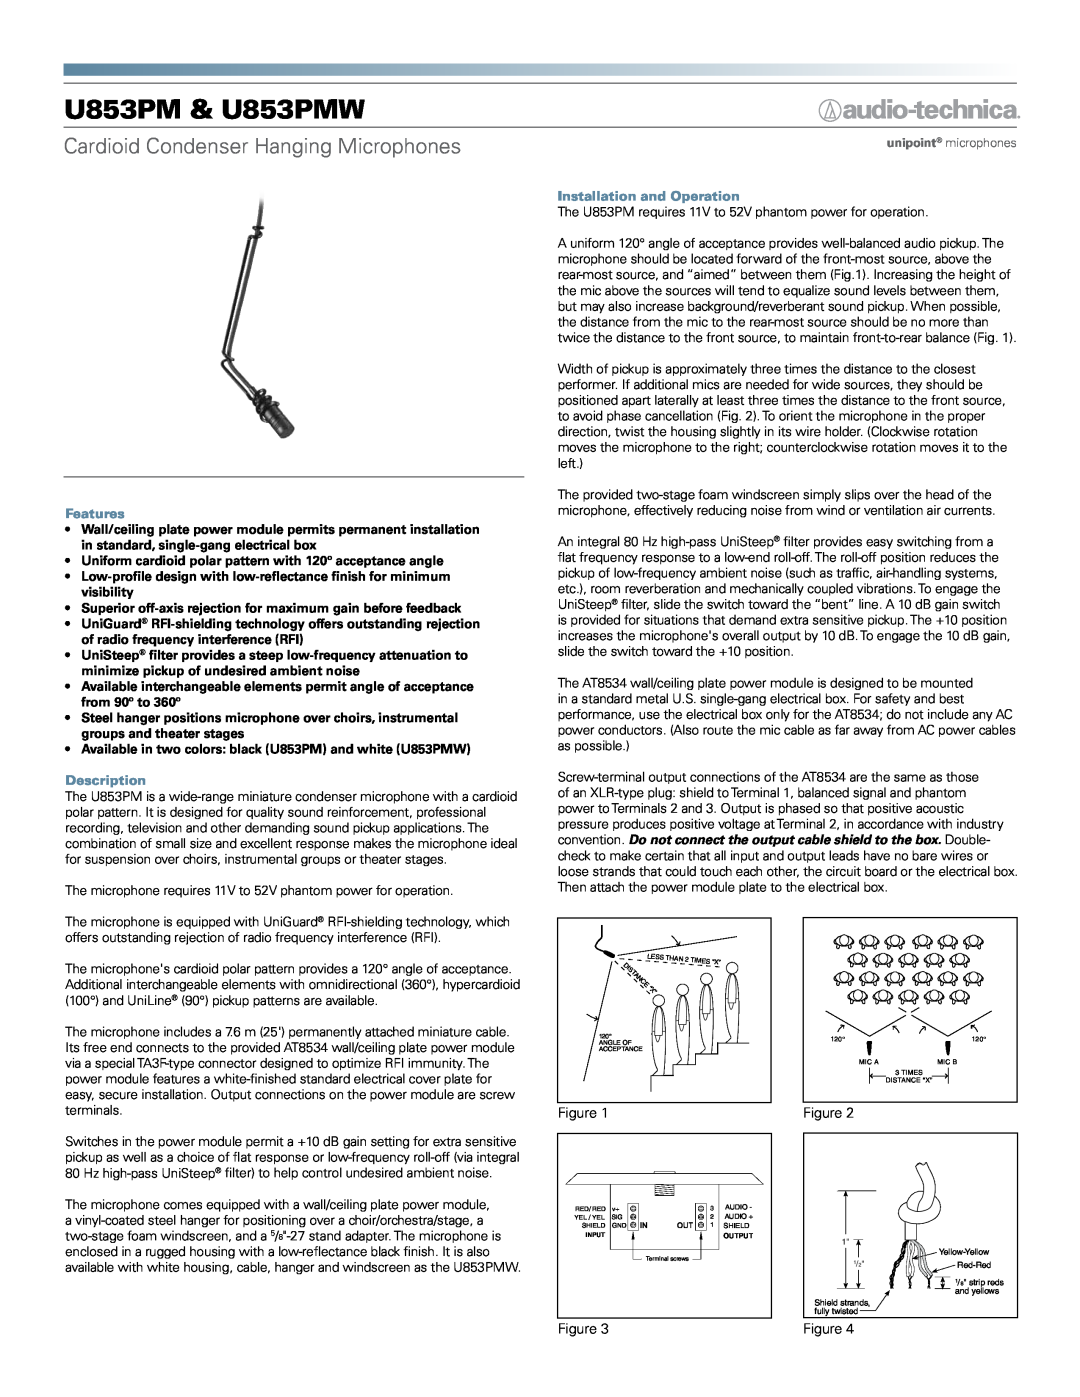 Audio-Technica manual U853PM & U853PMW, Cardioid Condenser Hanging Microphones, Features, Description 